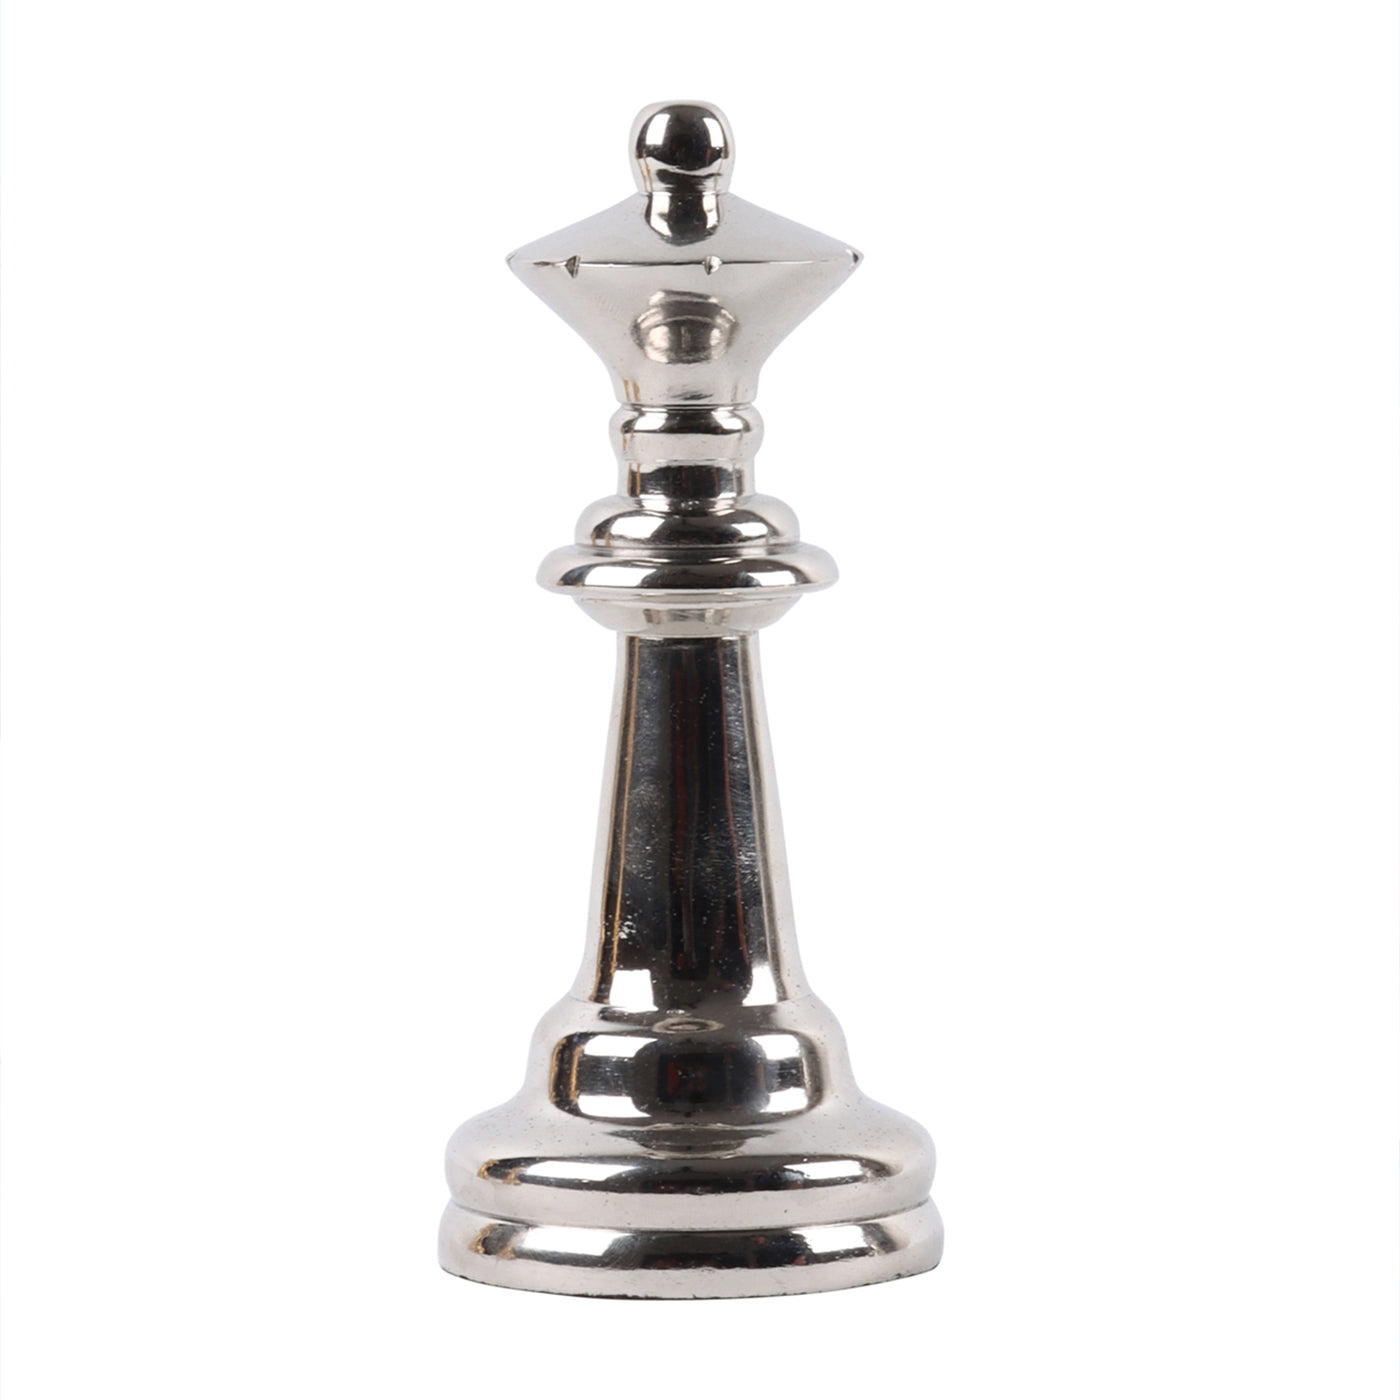 Decorative  chess queen nickel small